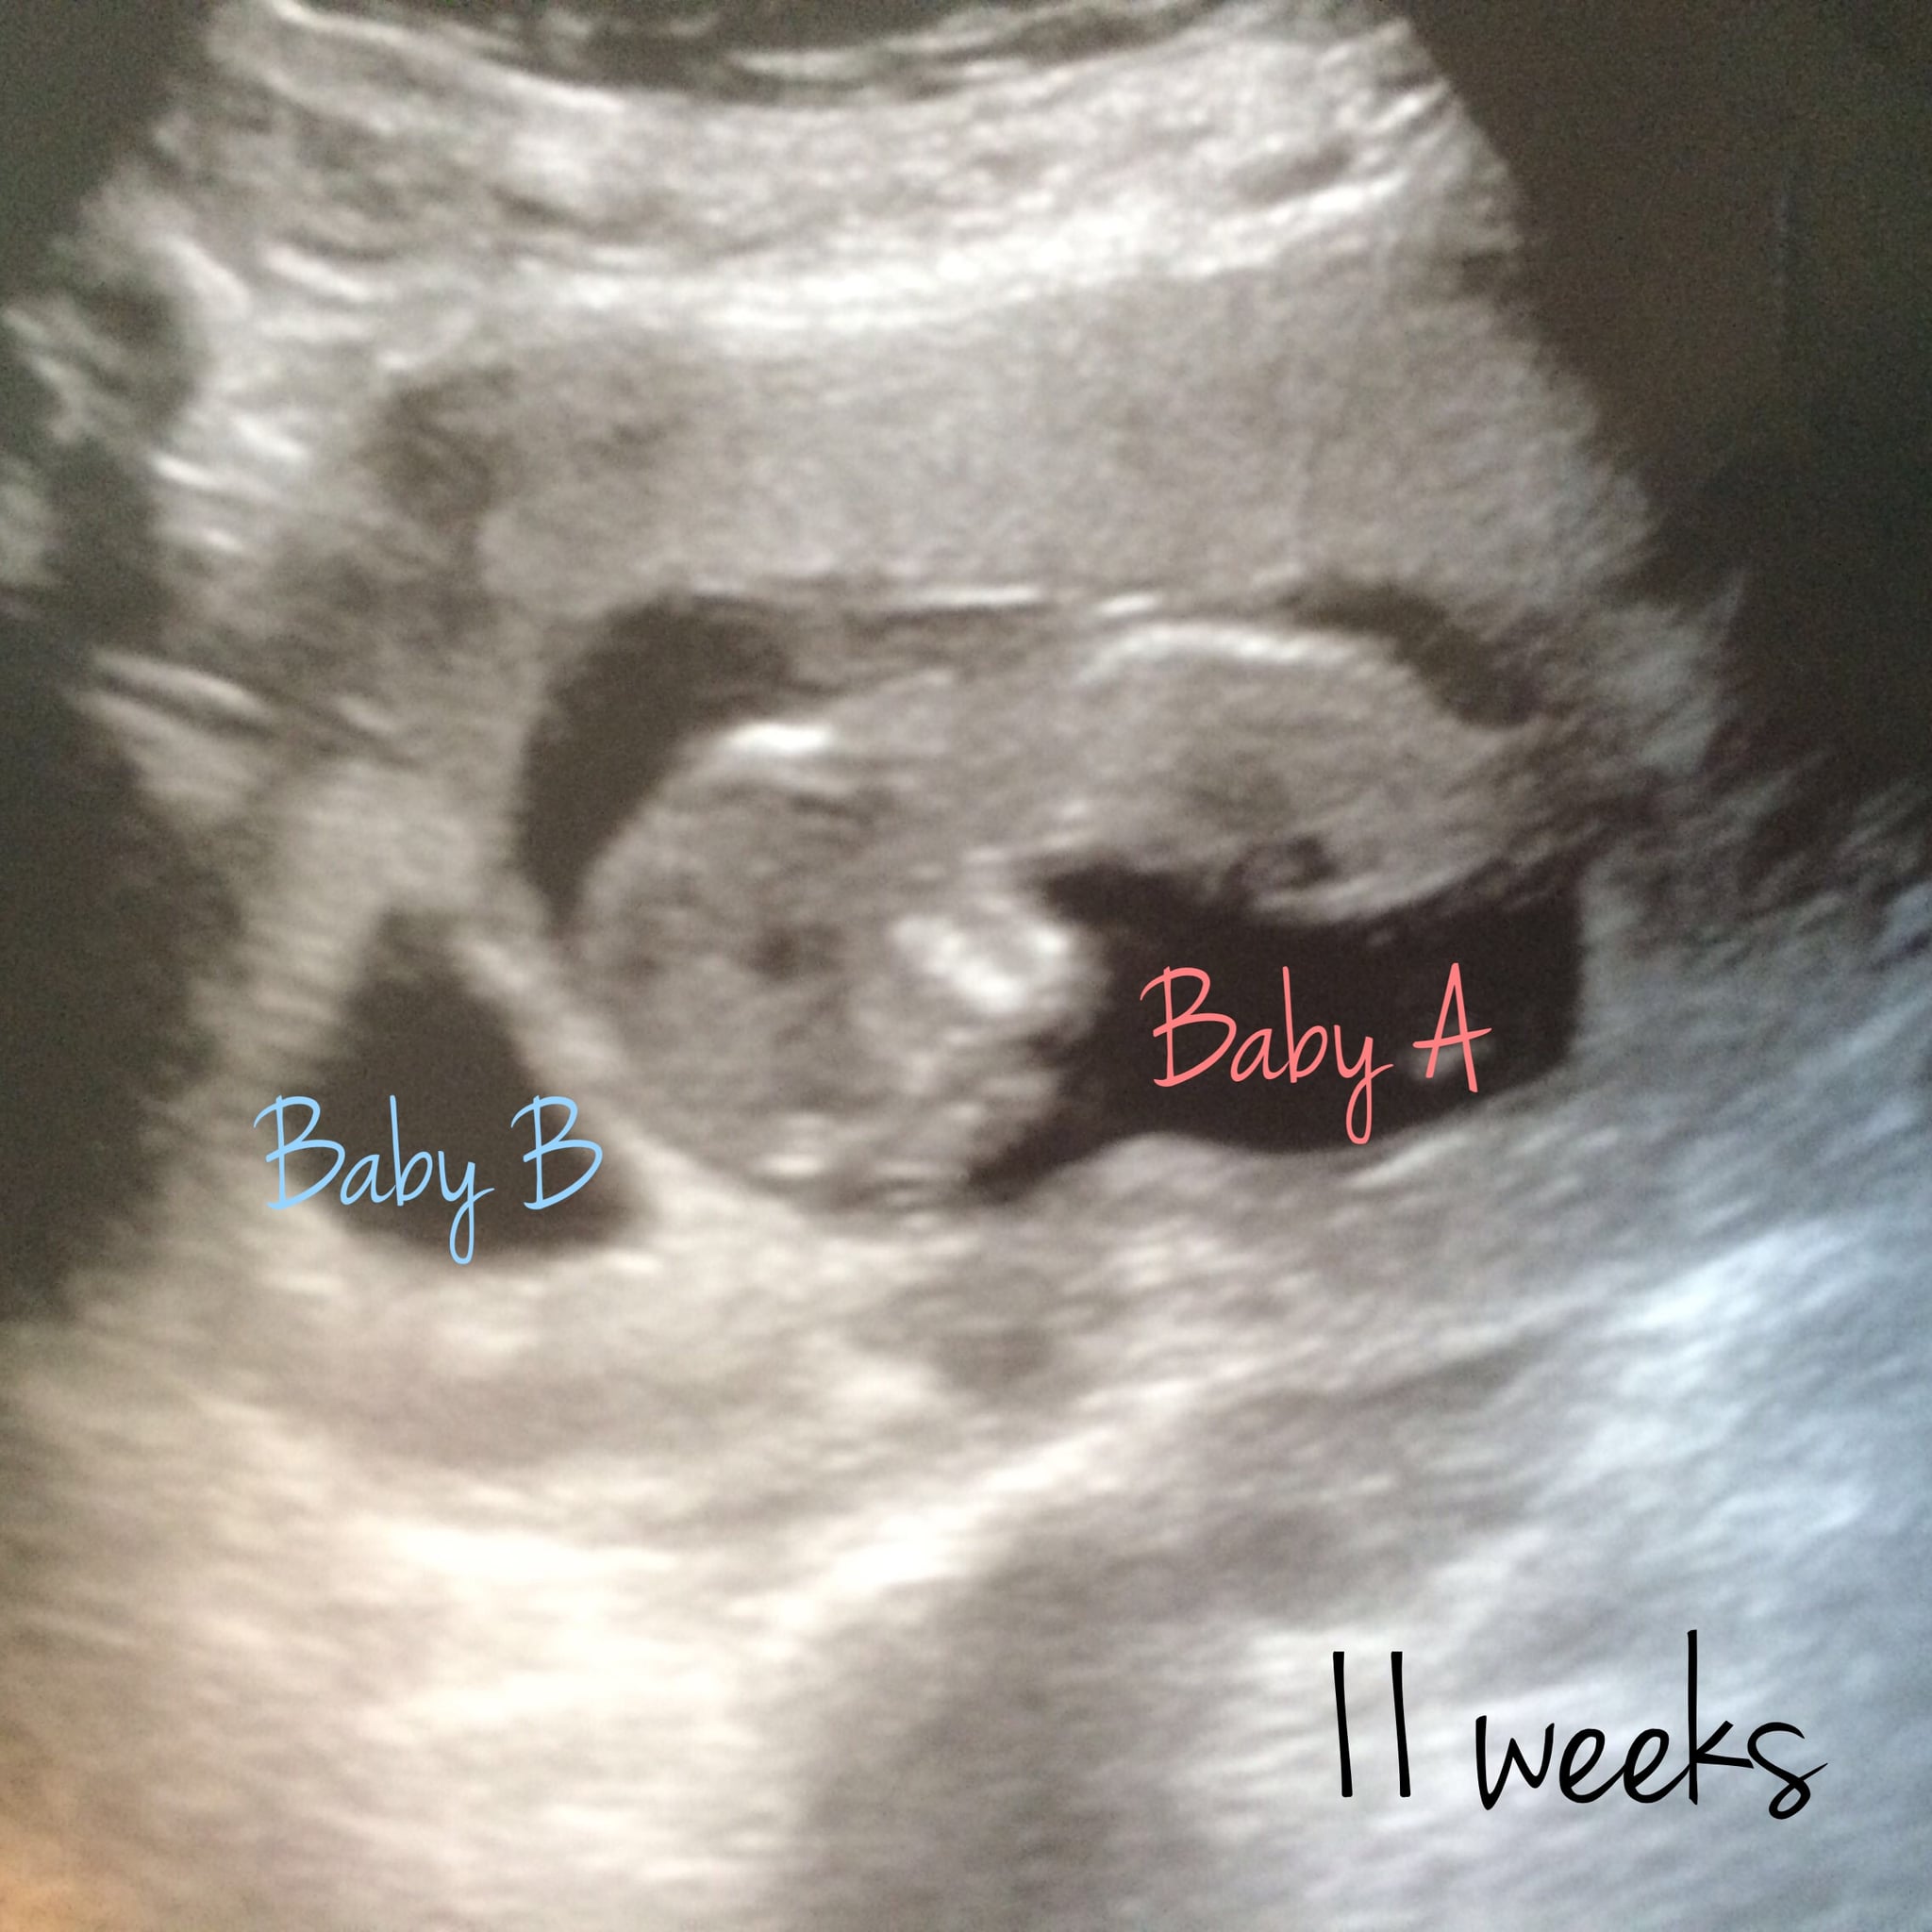 11-week ultrasound photo